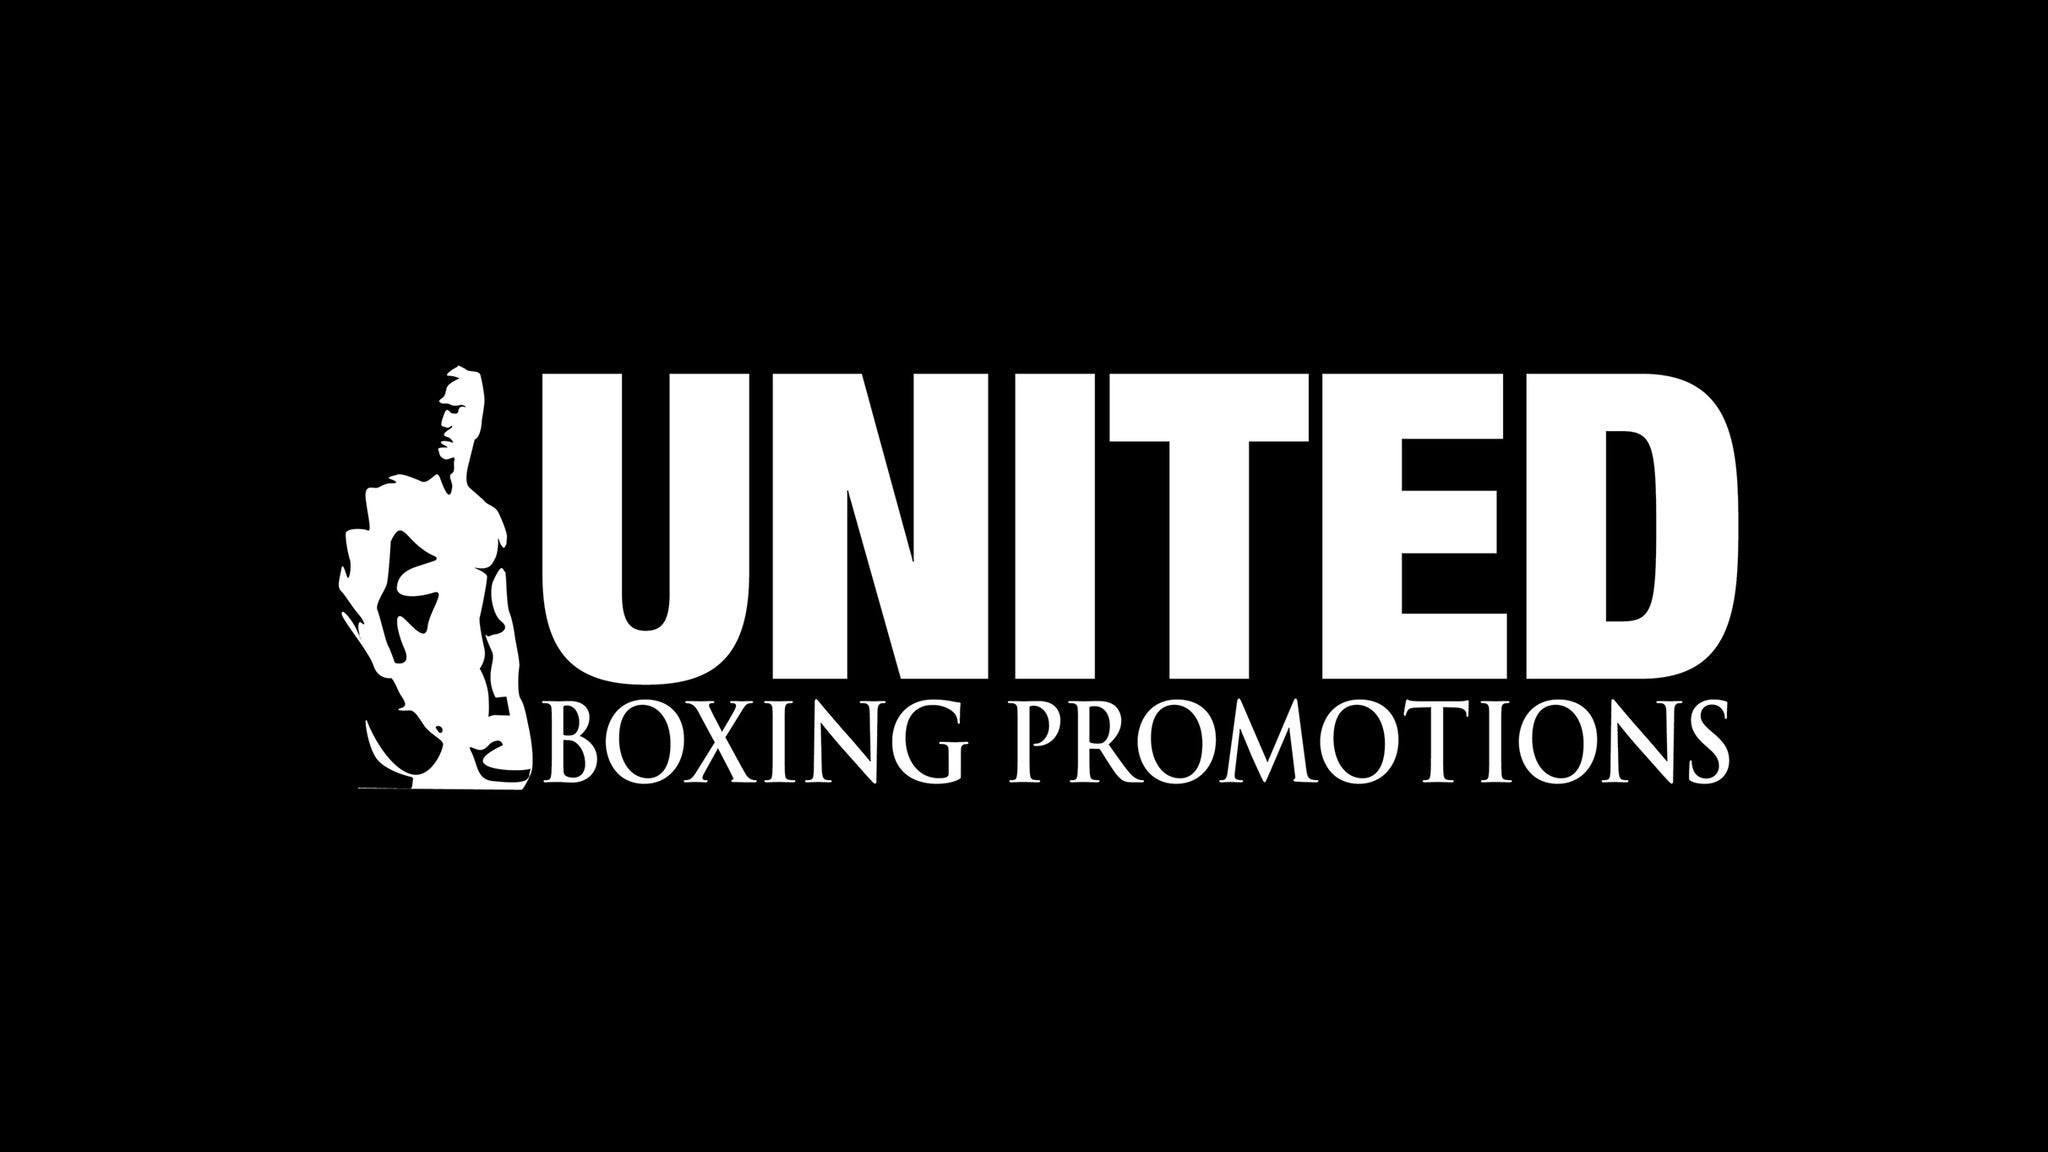 United Boxing in Brampton promo photo for Me + 3  presale offer code